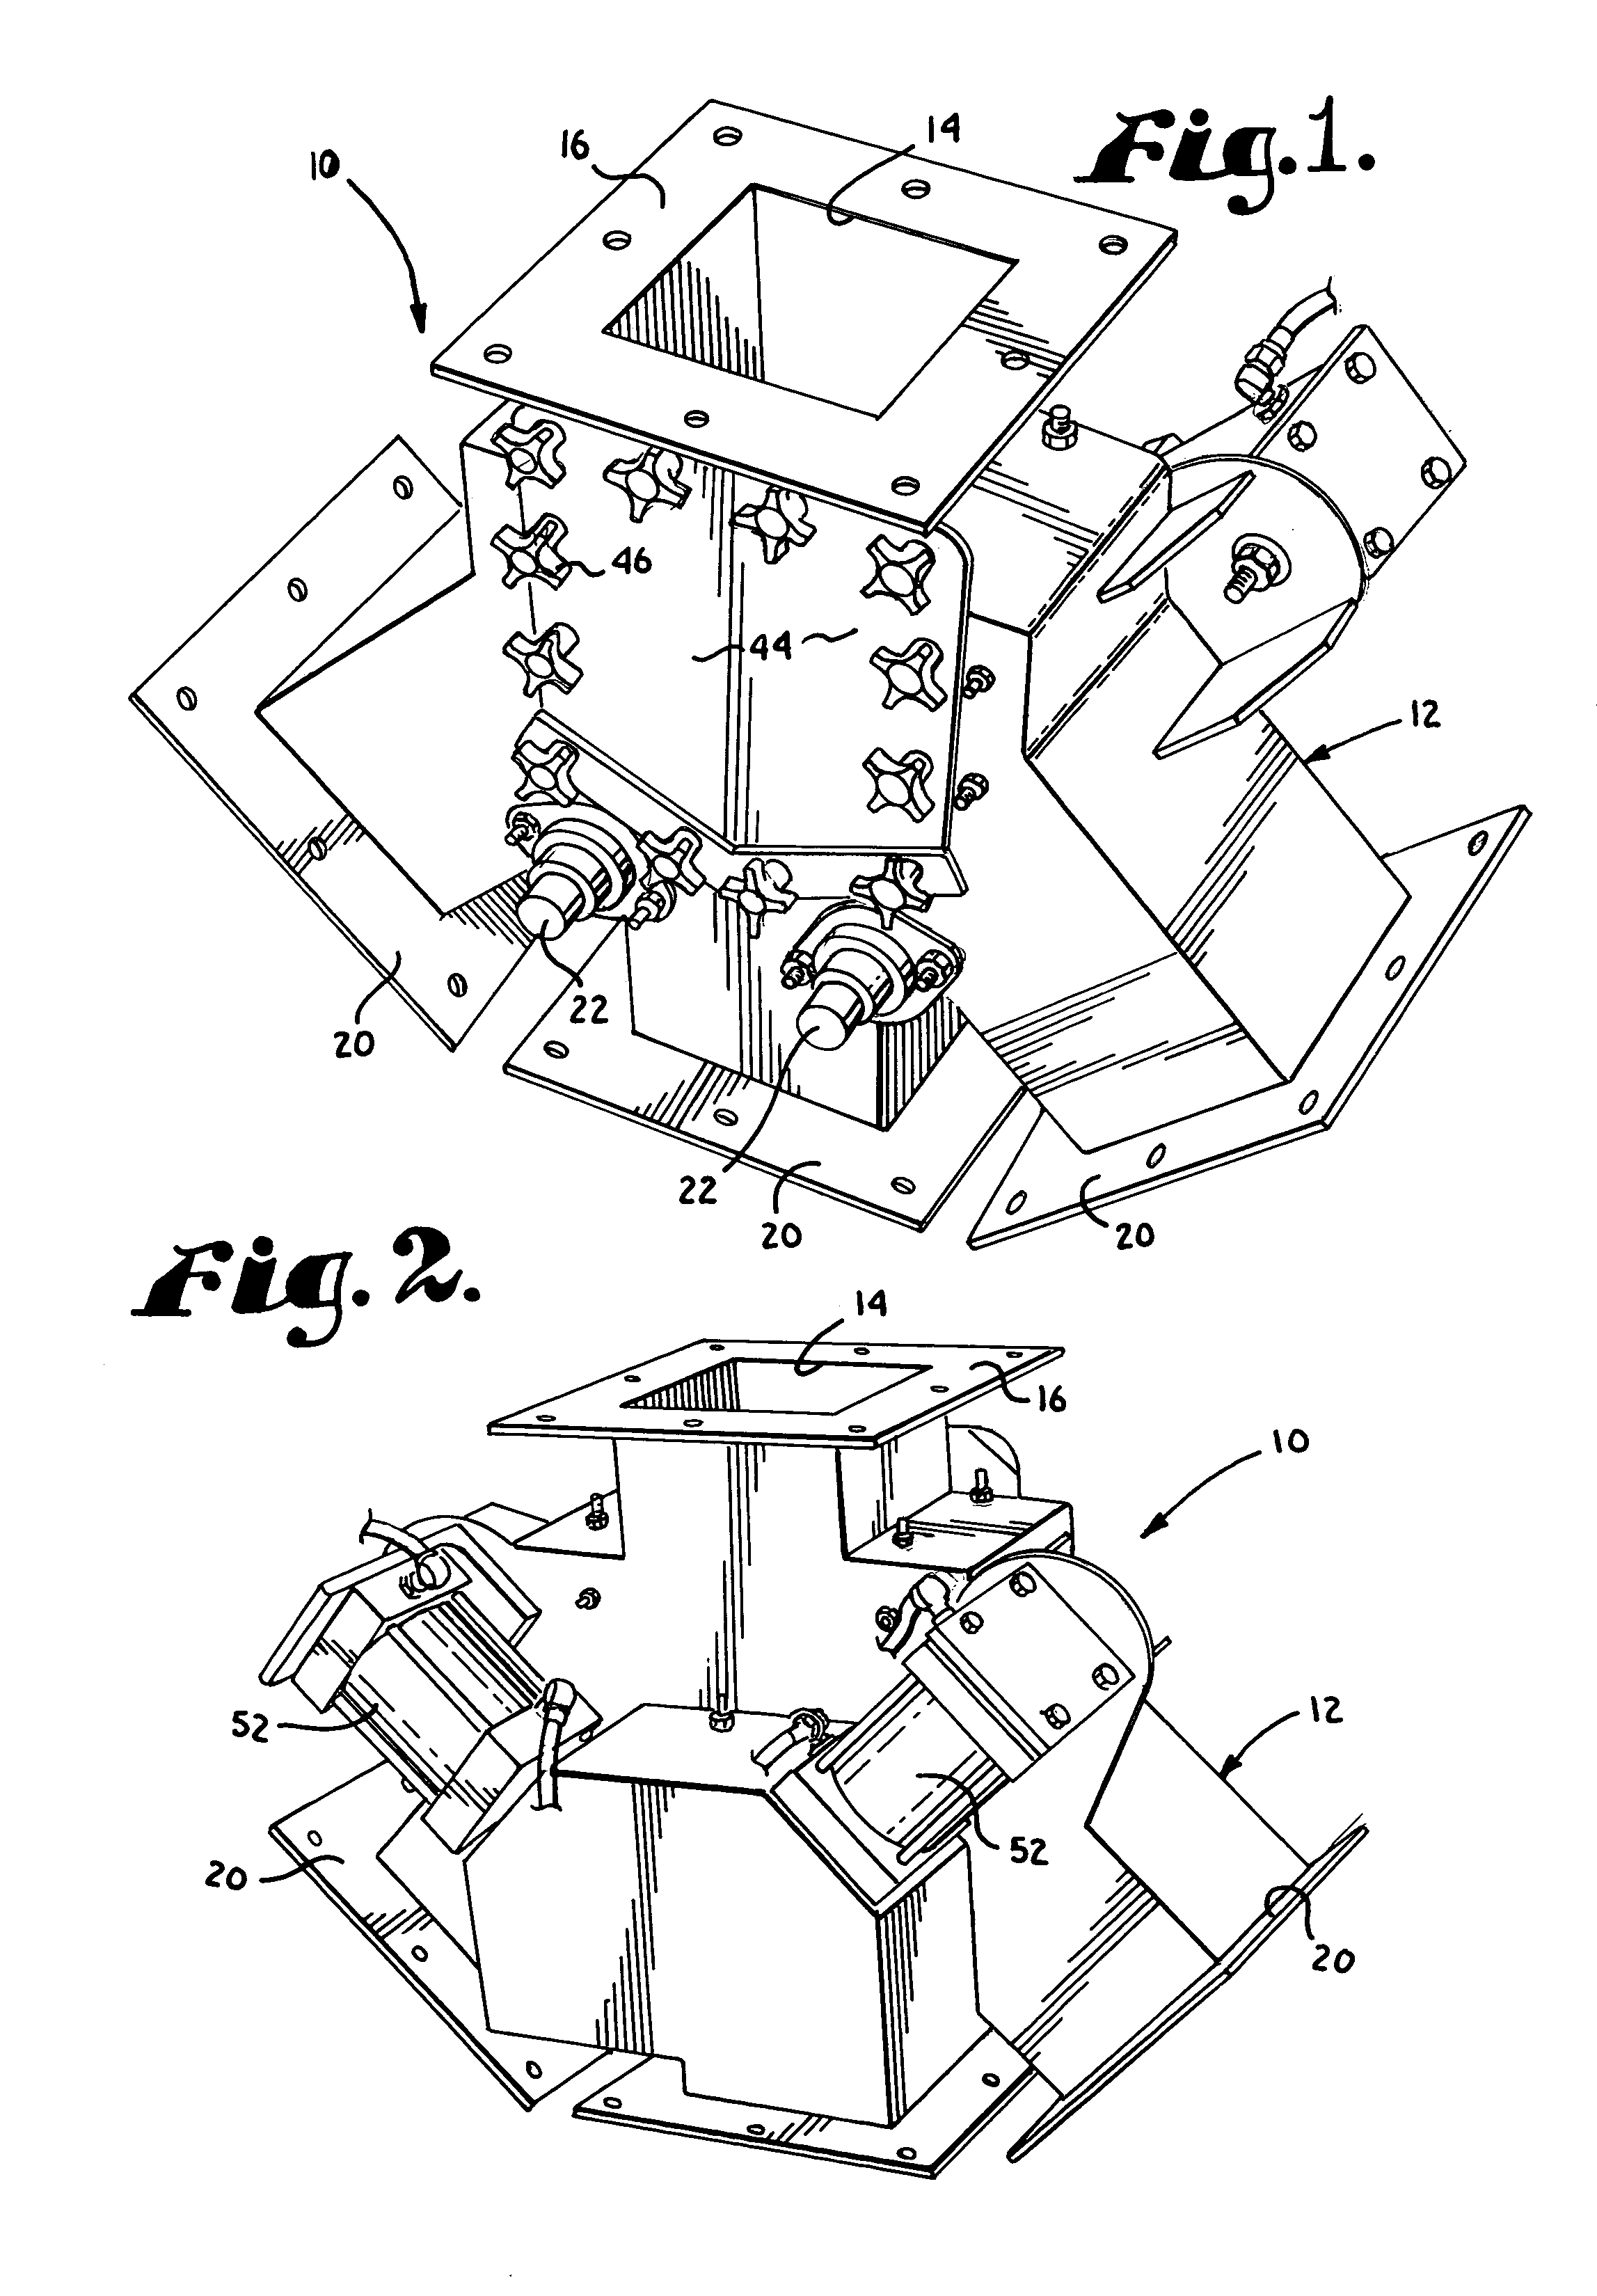 Diverter valve with improved seal